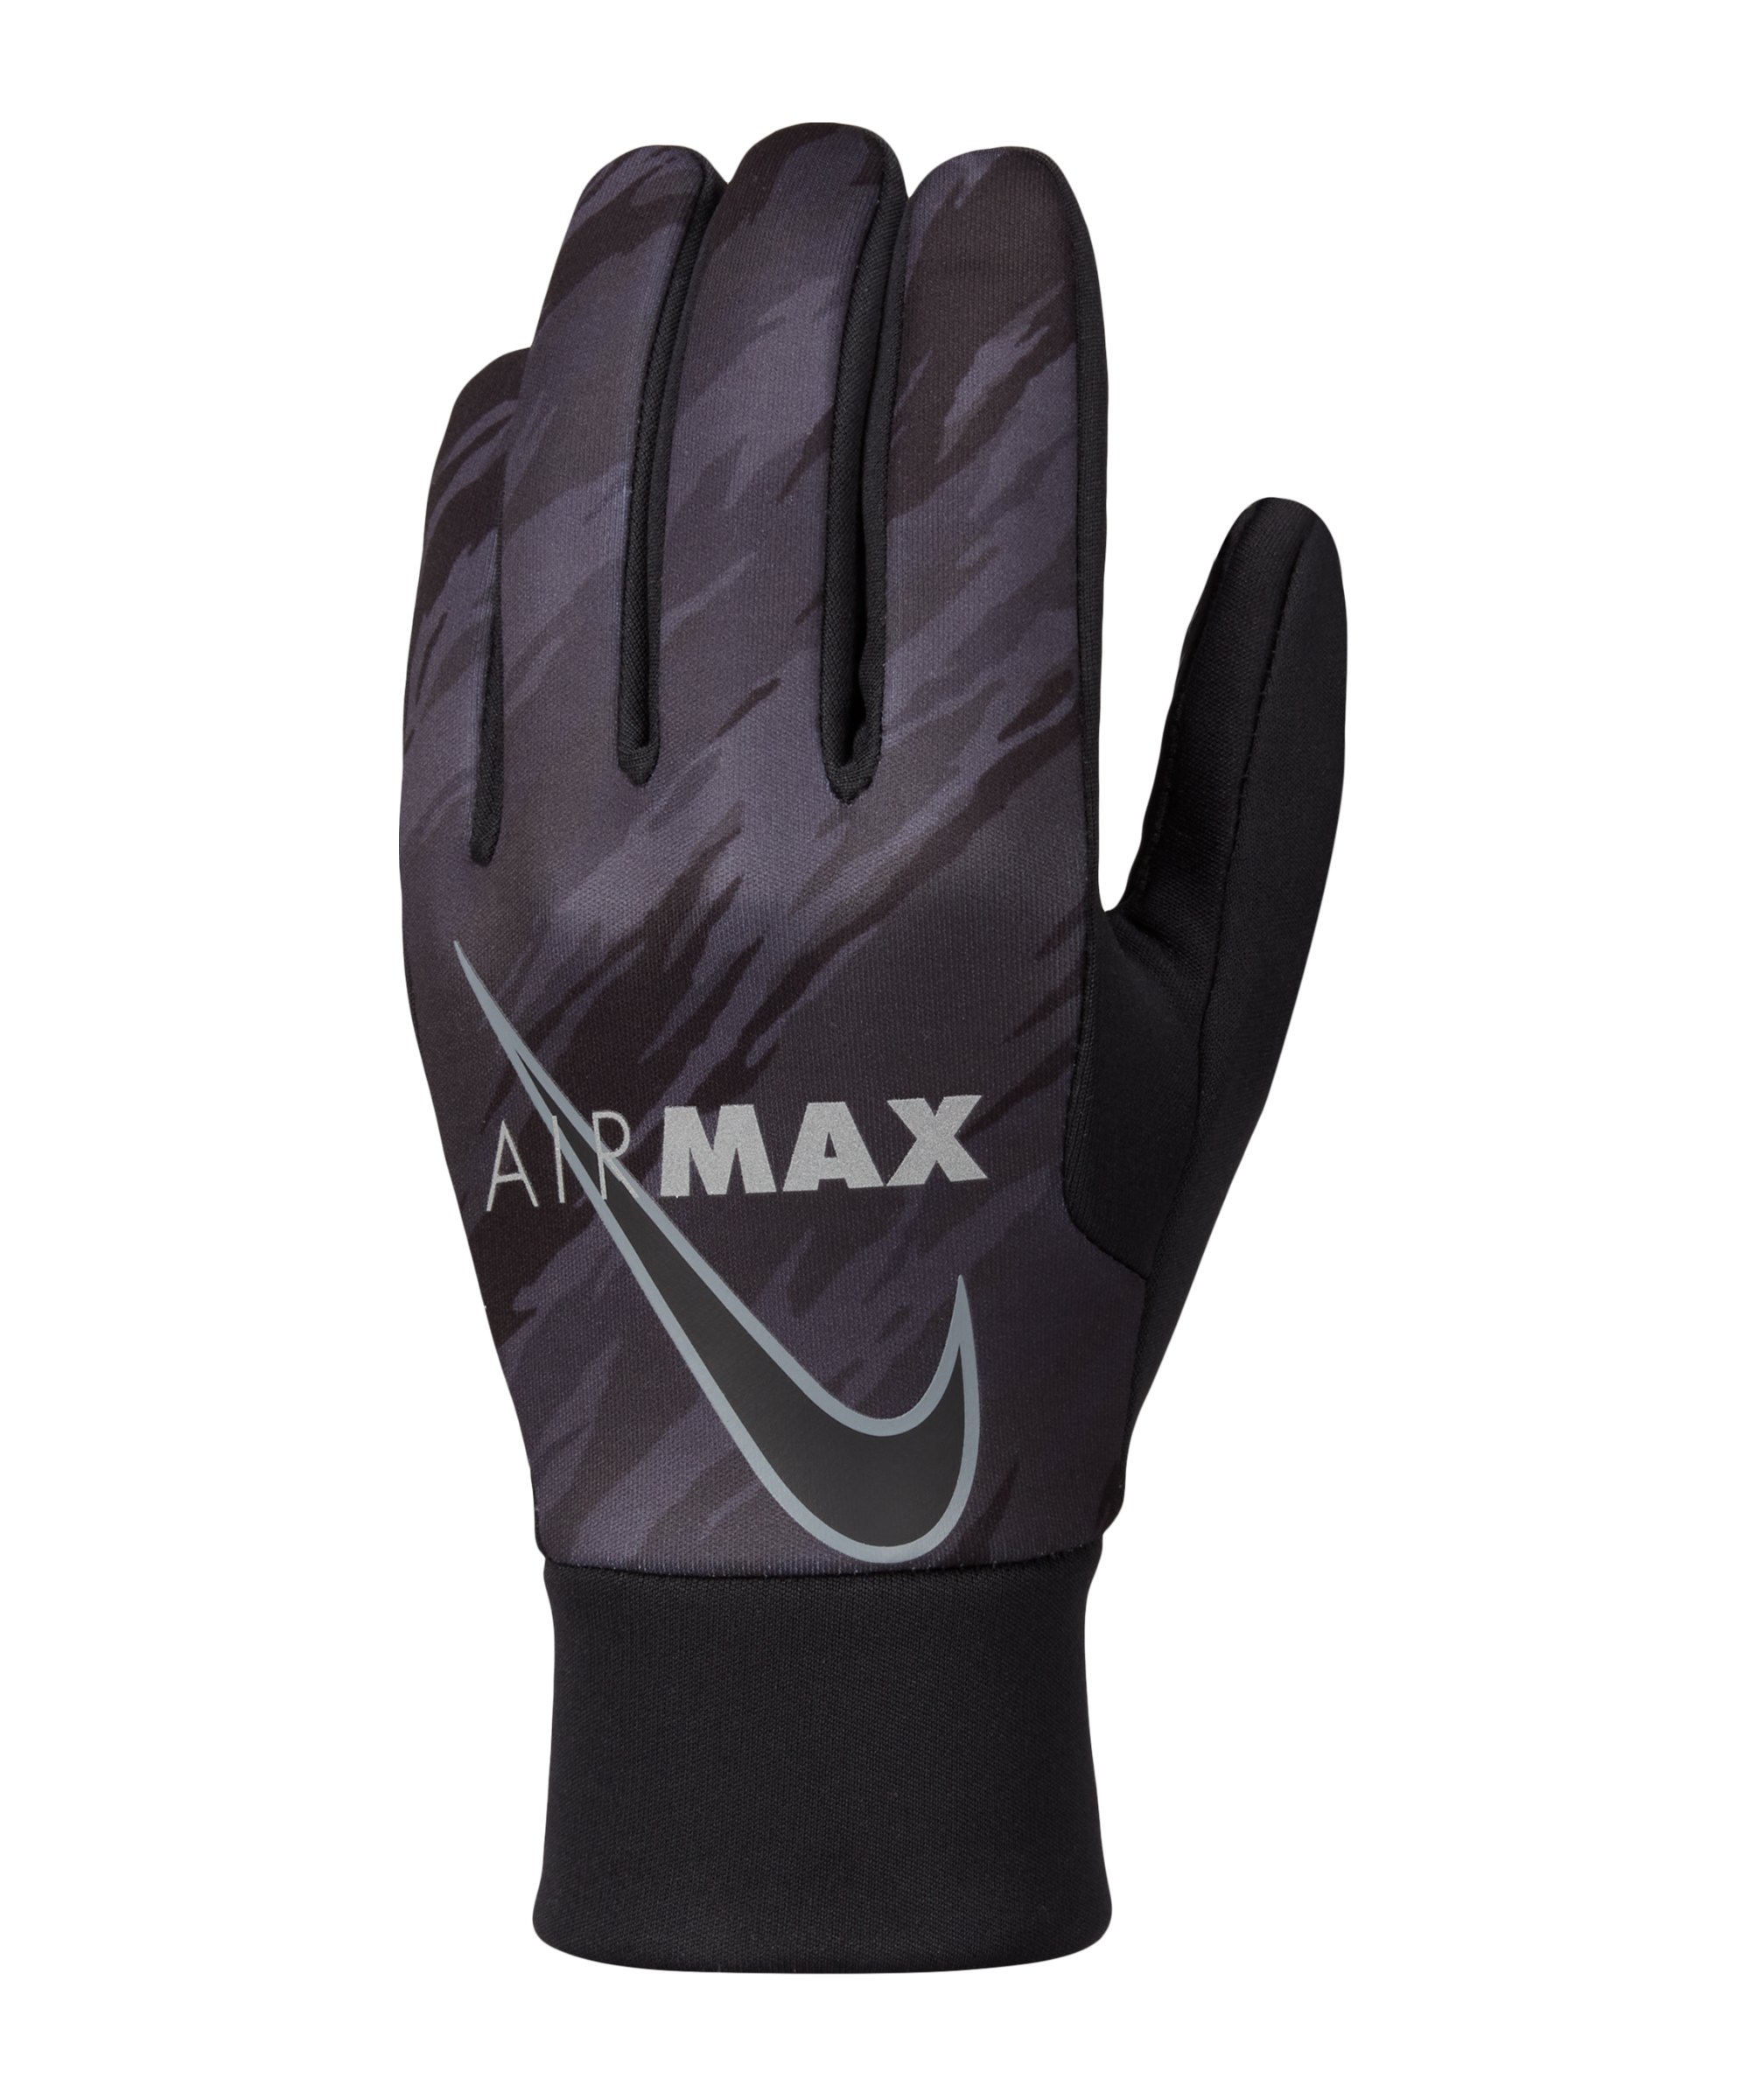 Nike Air Max Hyperwarm Handschuhe Schwarz F010 - schwarz